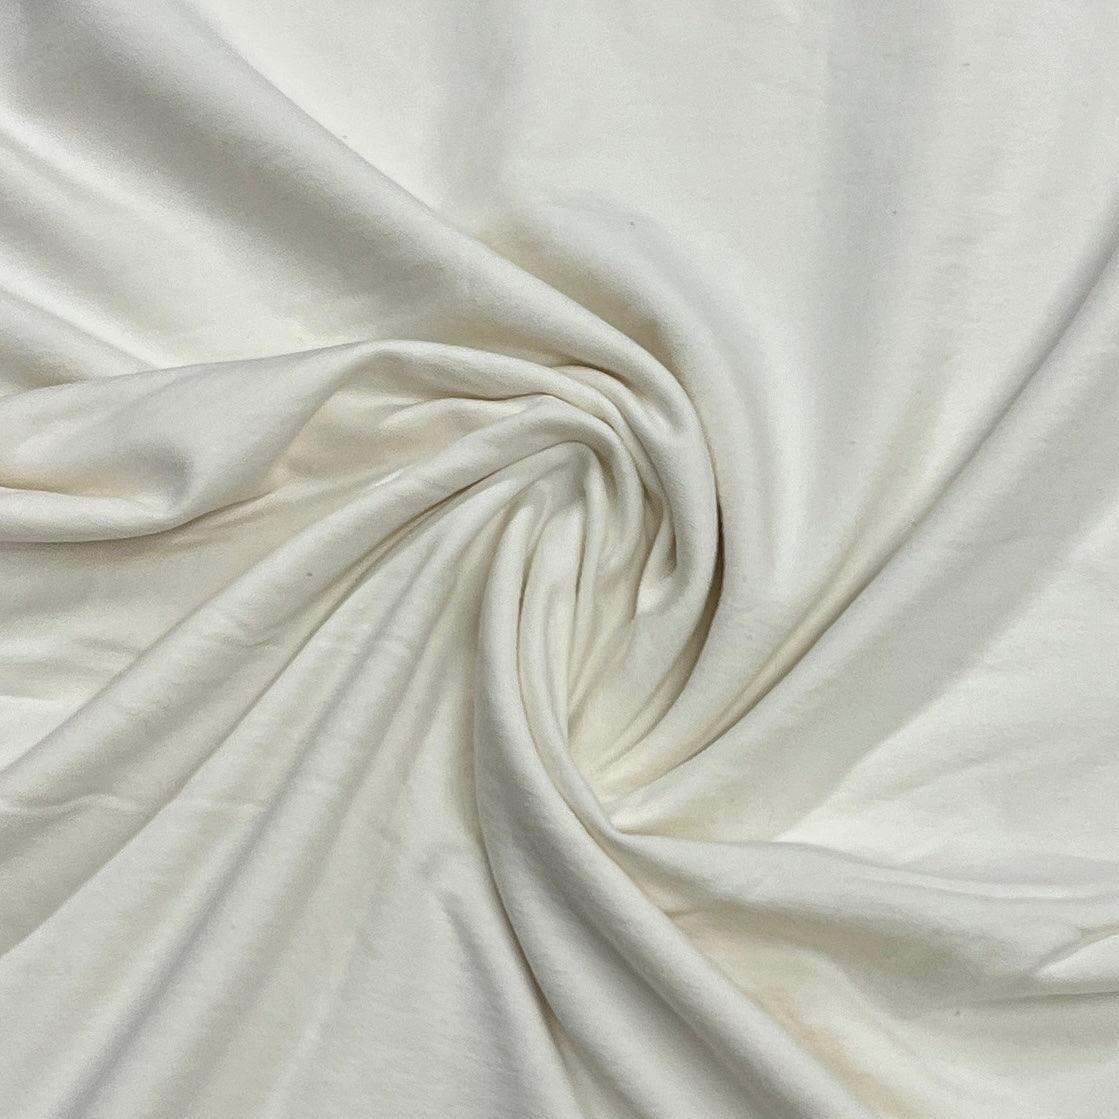 Bamboo Hemp Stretch Fleece Fabric - 340 GSM, $15.83/yd, 15 Yards - Nature's Fabrics